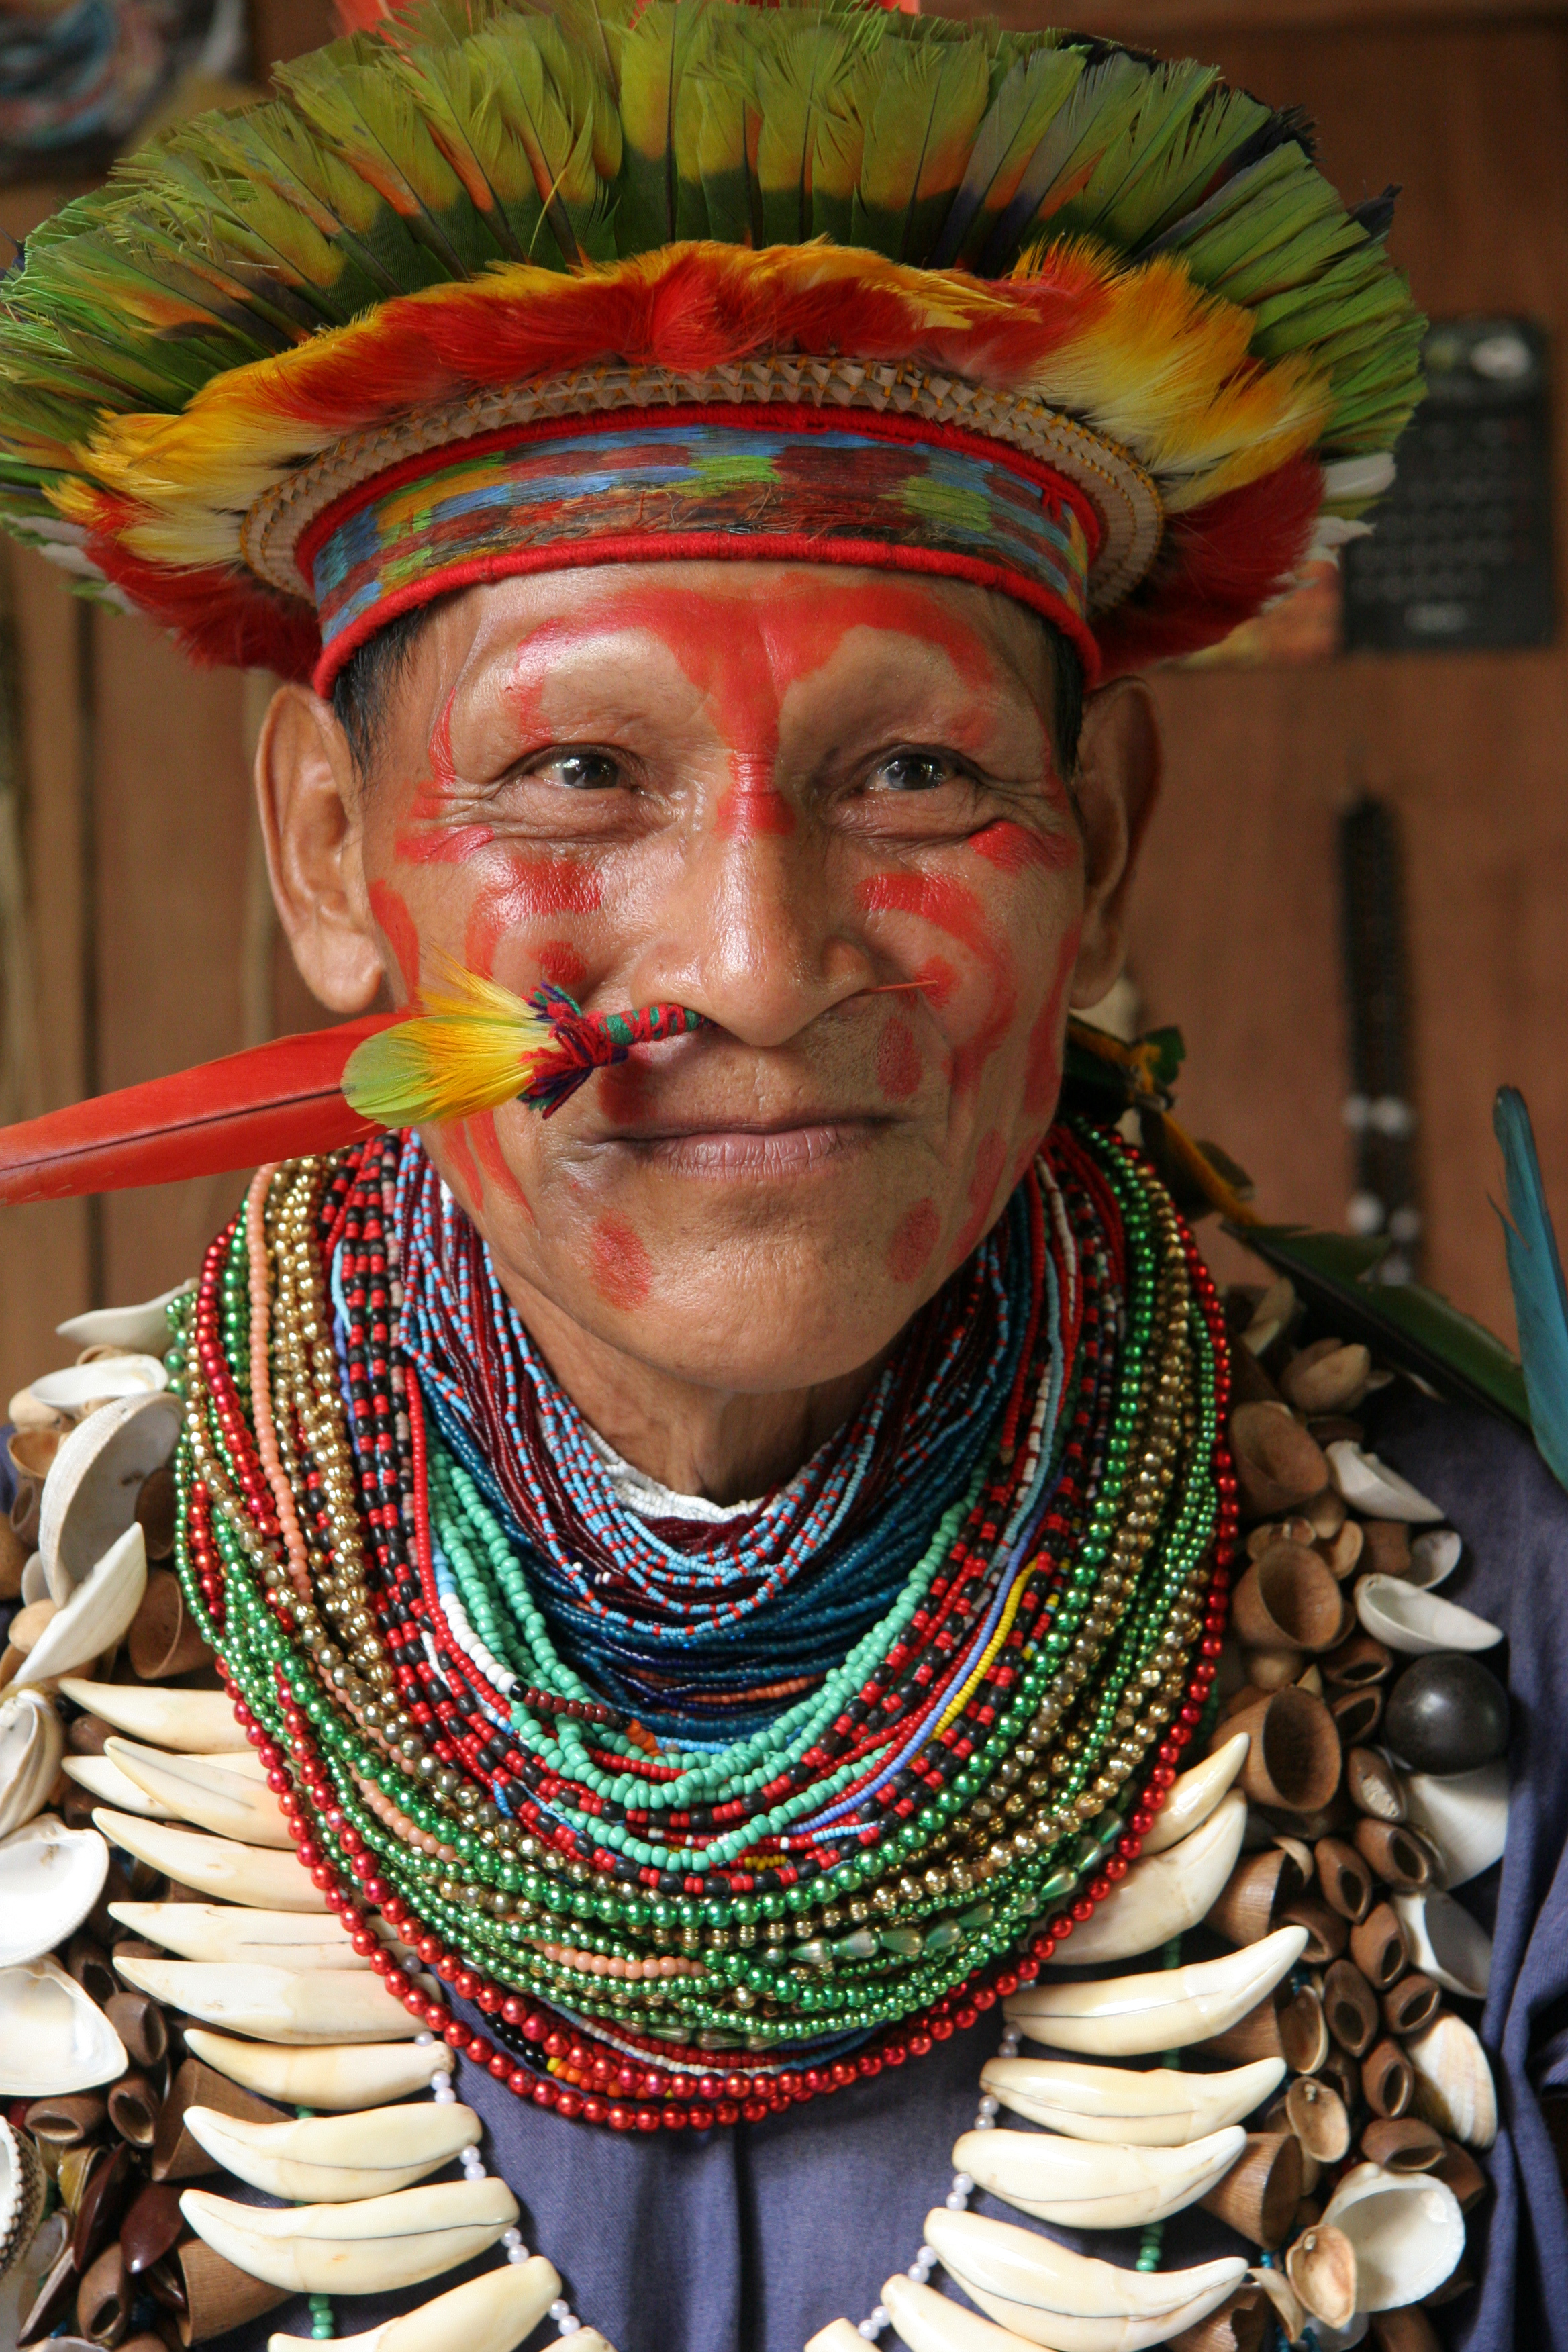 Shaman of Ecuadorian Amazon, June 2016 (Veton Picq, Wikipedia)